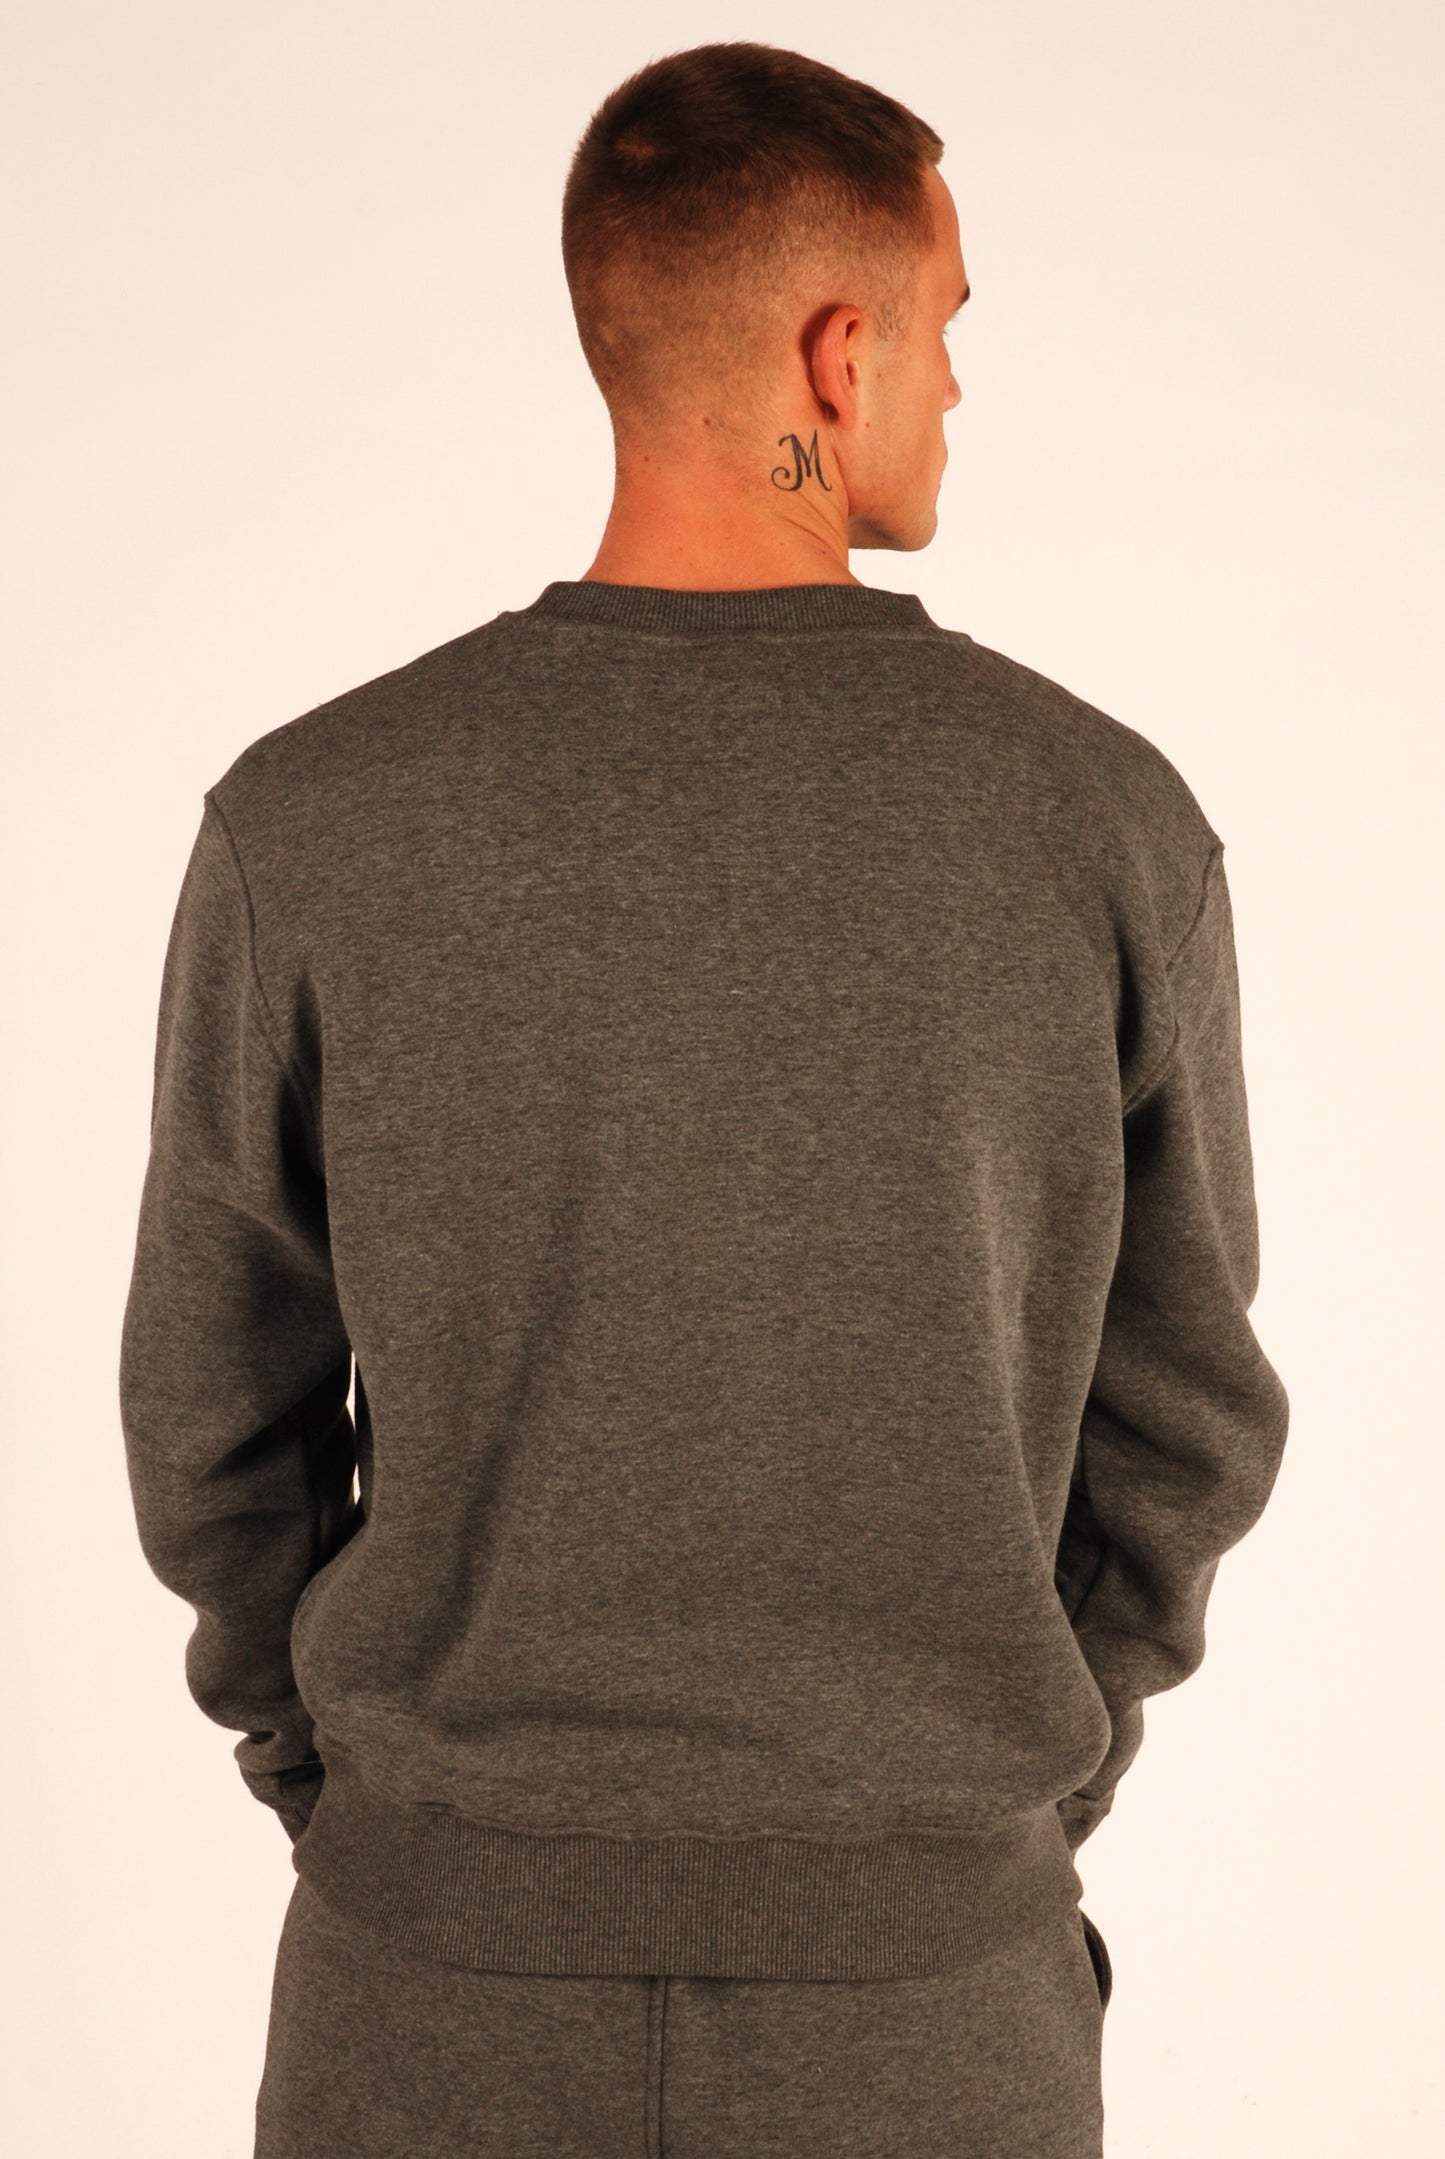 KRONK Detroit Applique Sweatshirt Loose Fit Charcoal with Black Logo